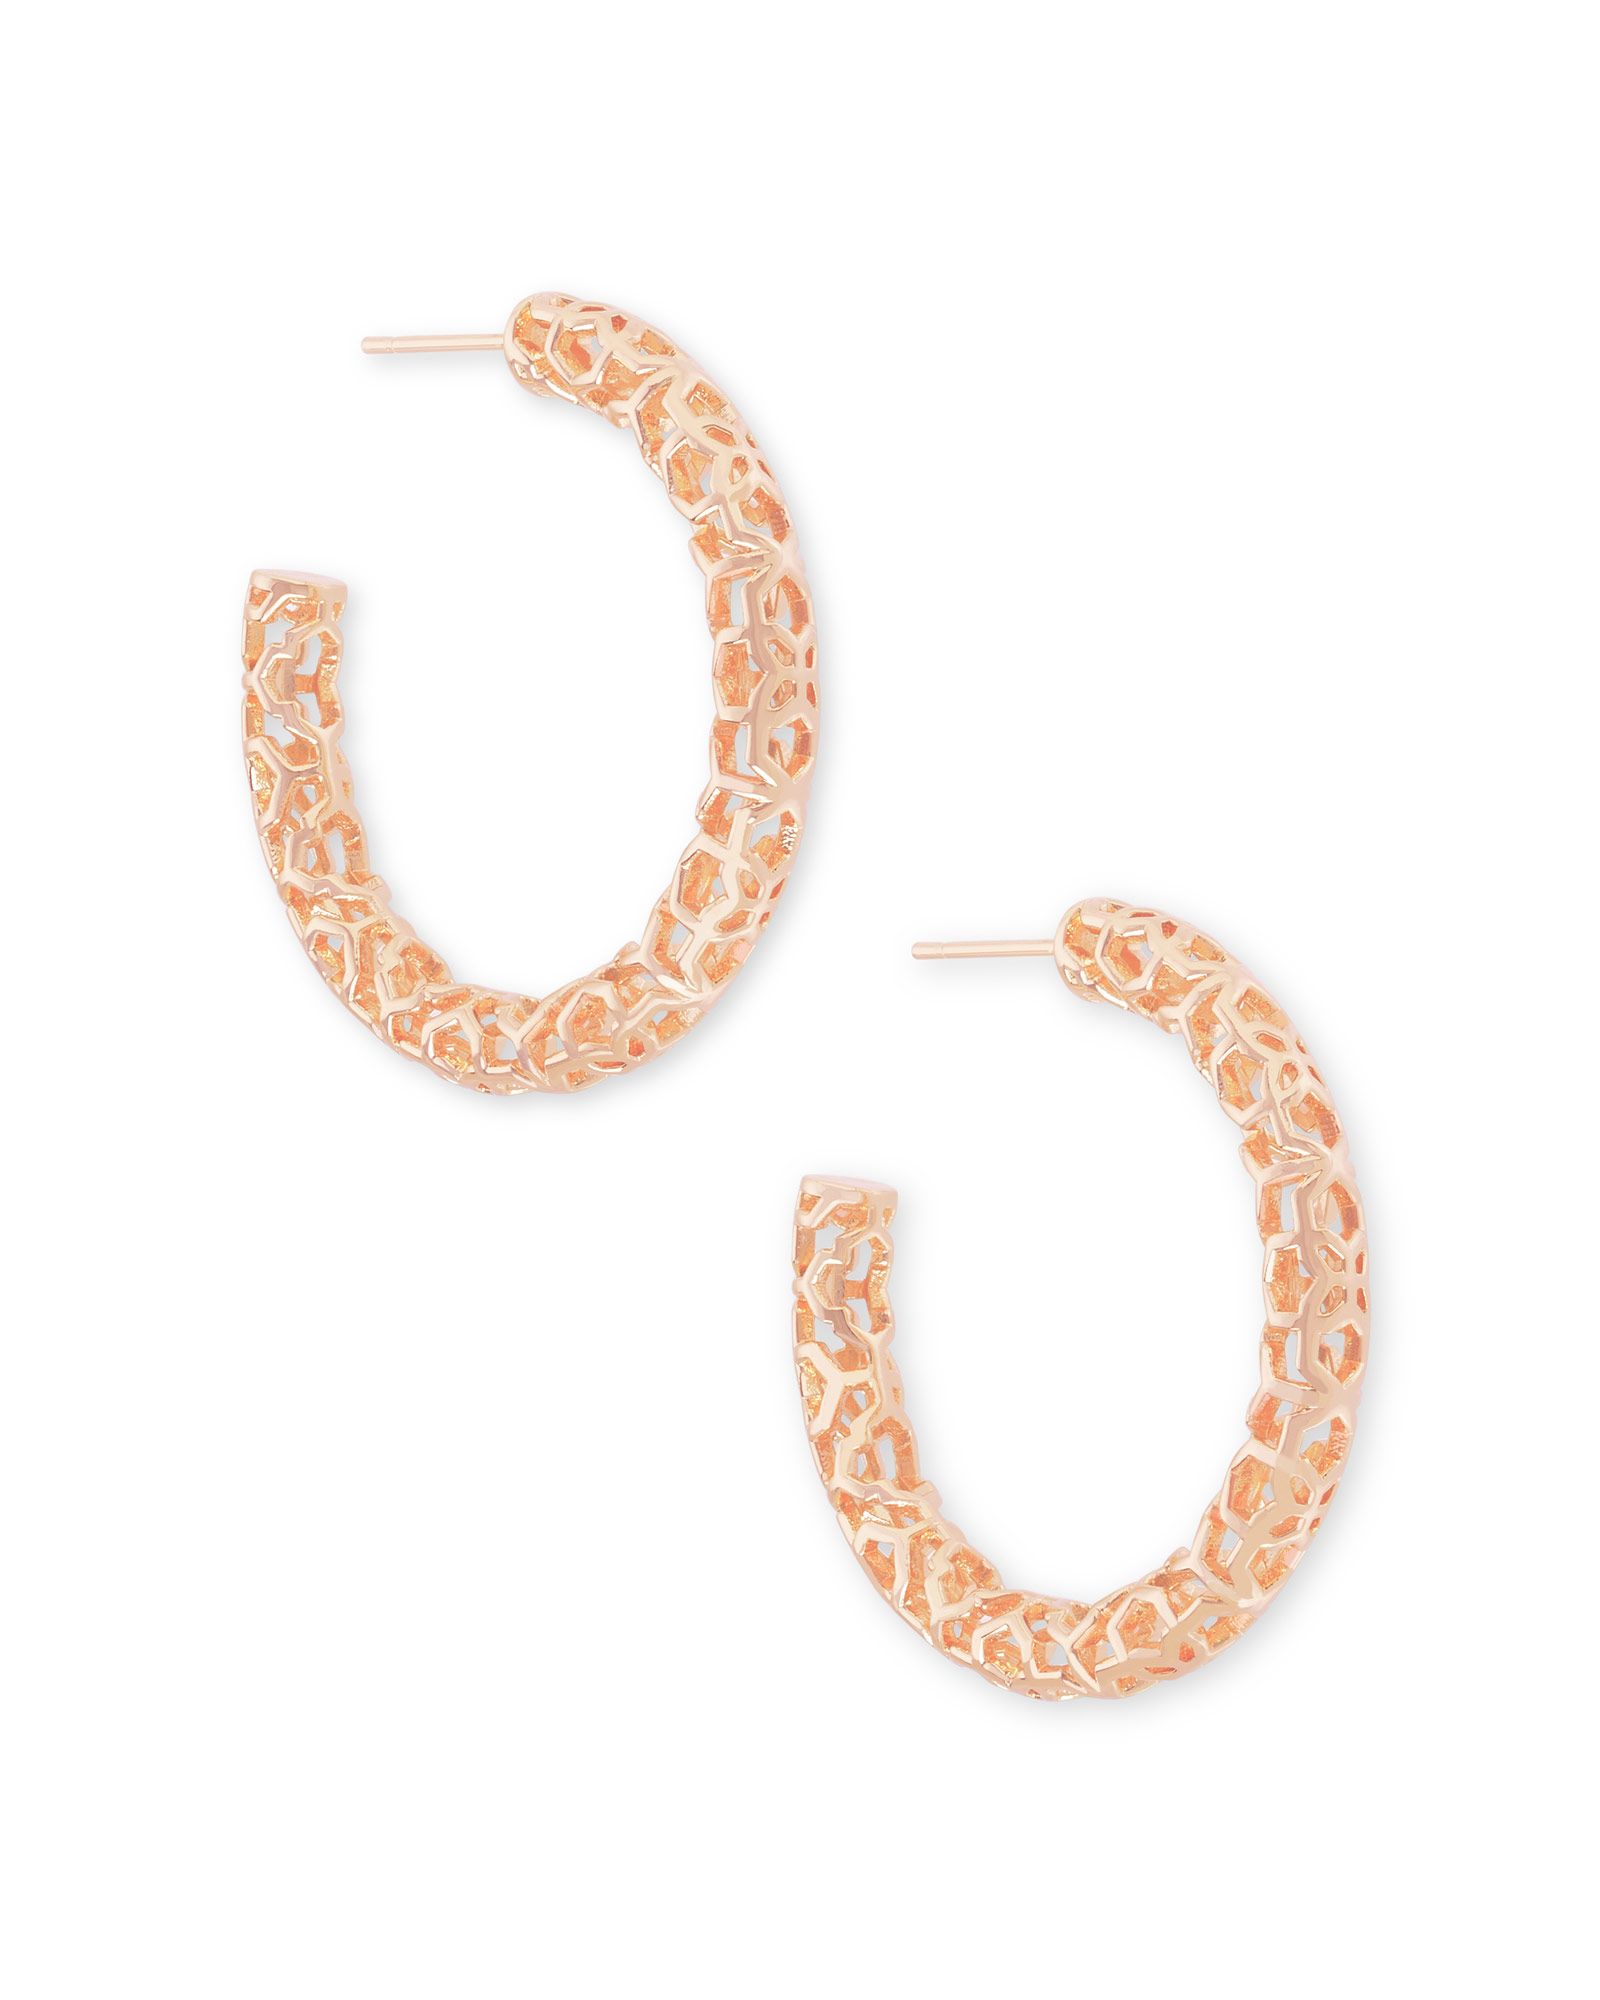 Maggie Small Hoop Earrings in Rose Gold Filigree | Kendra Scott